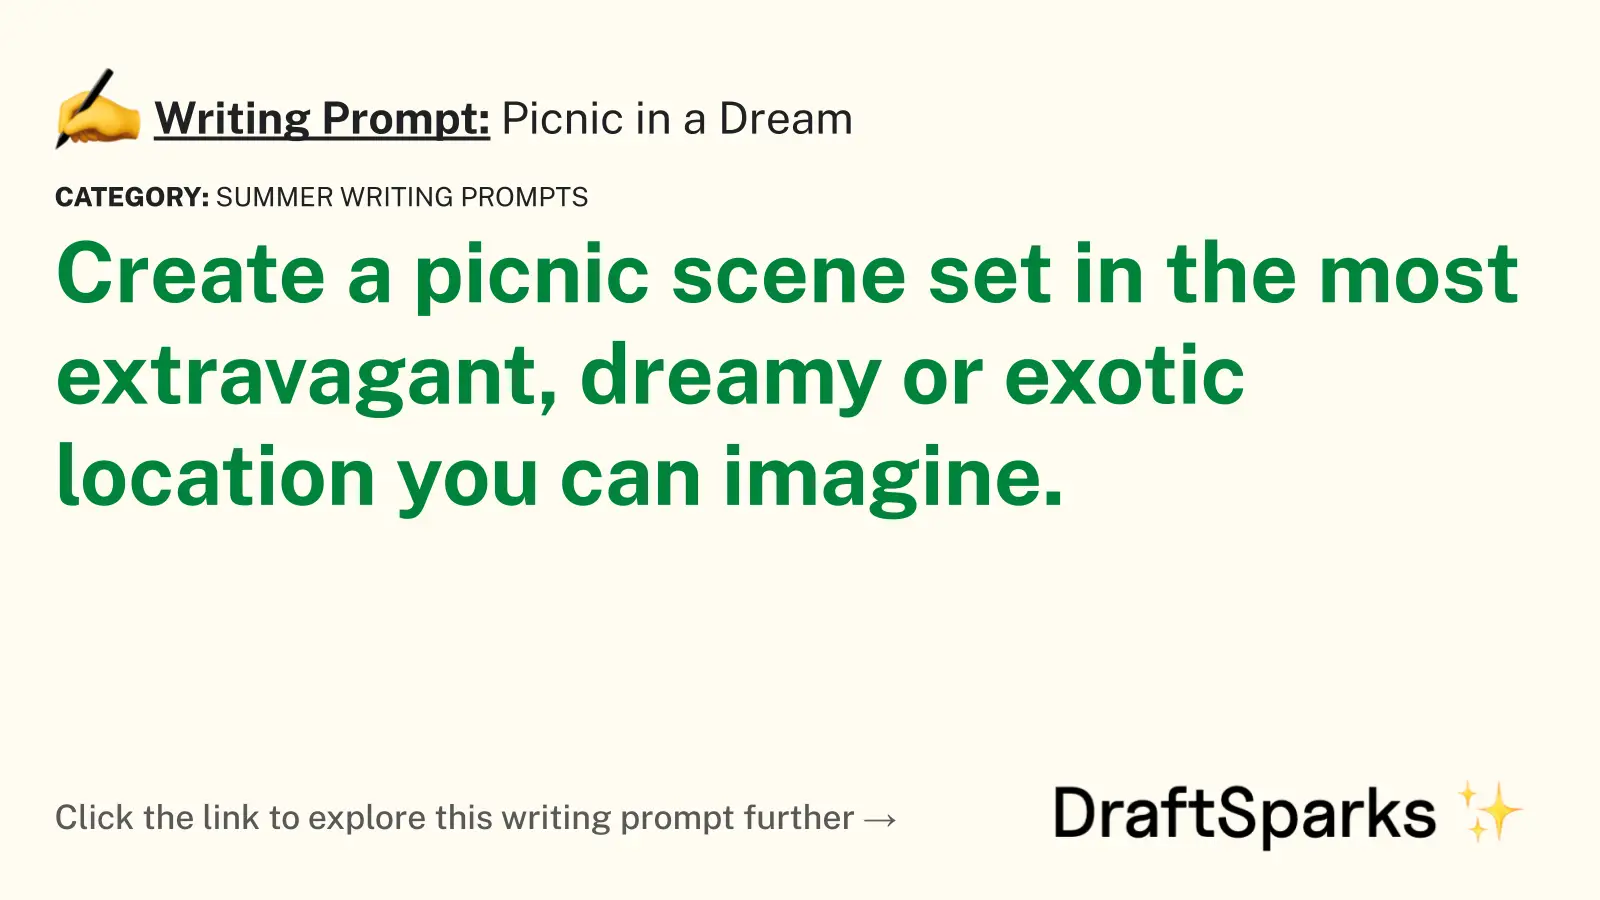 Picnic in a Dream